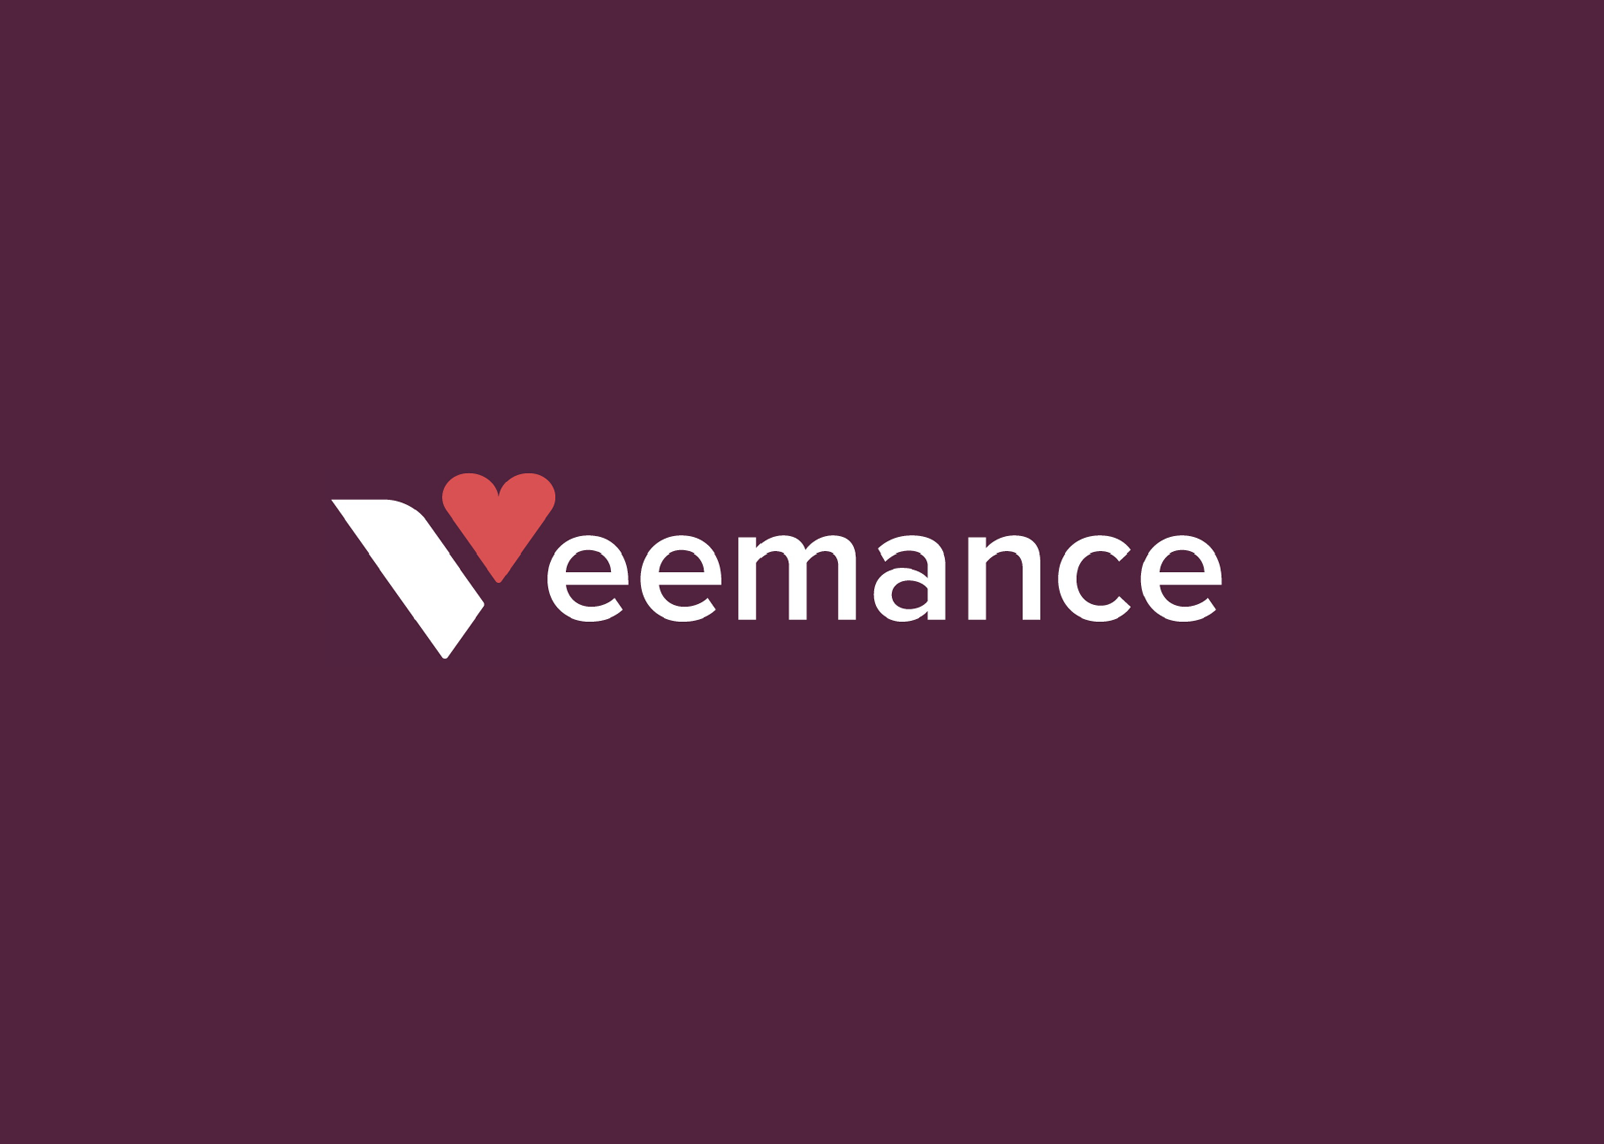 Veemance - Branding and Logo Design by Code and Visual - screenshot